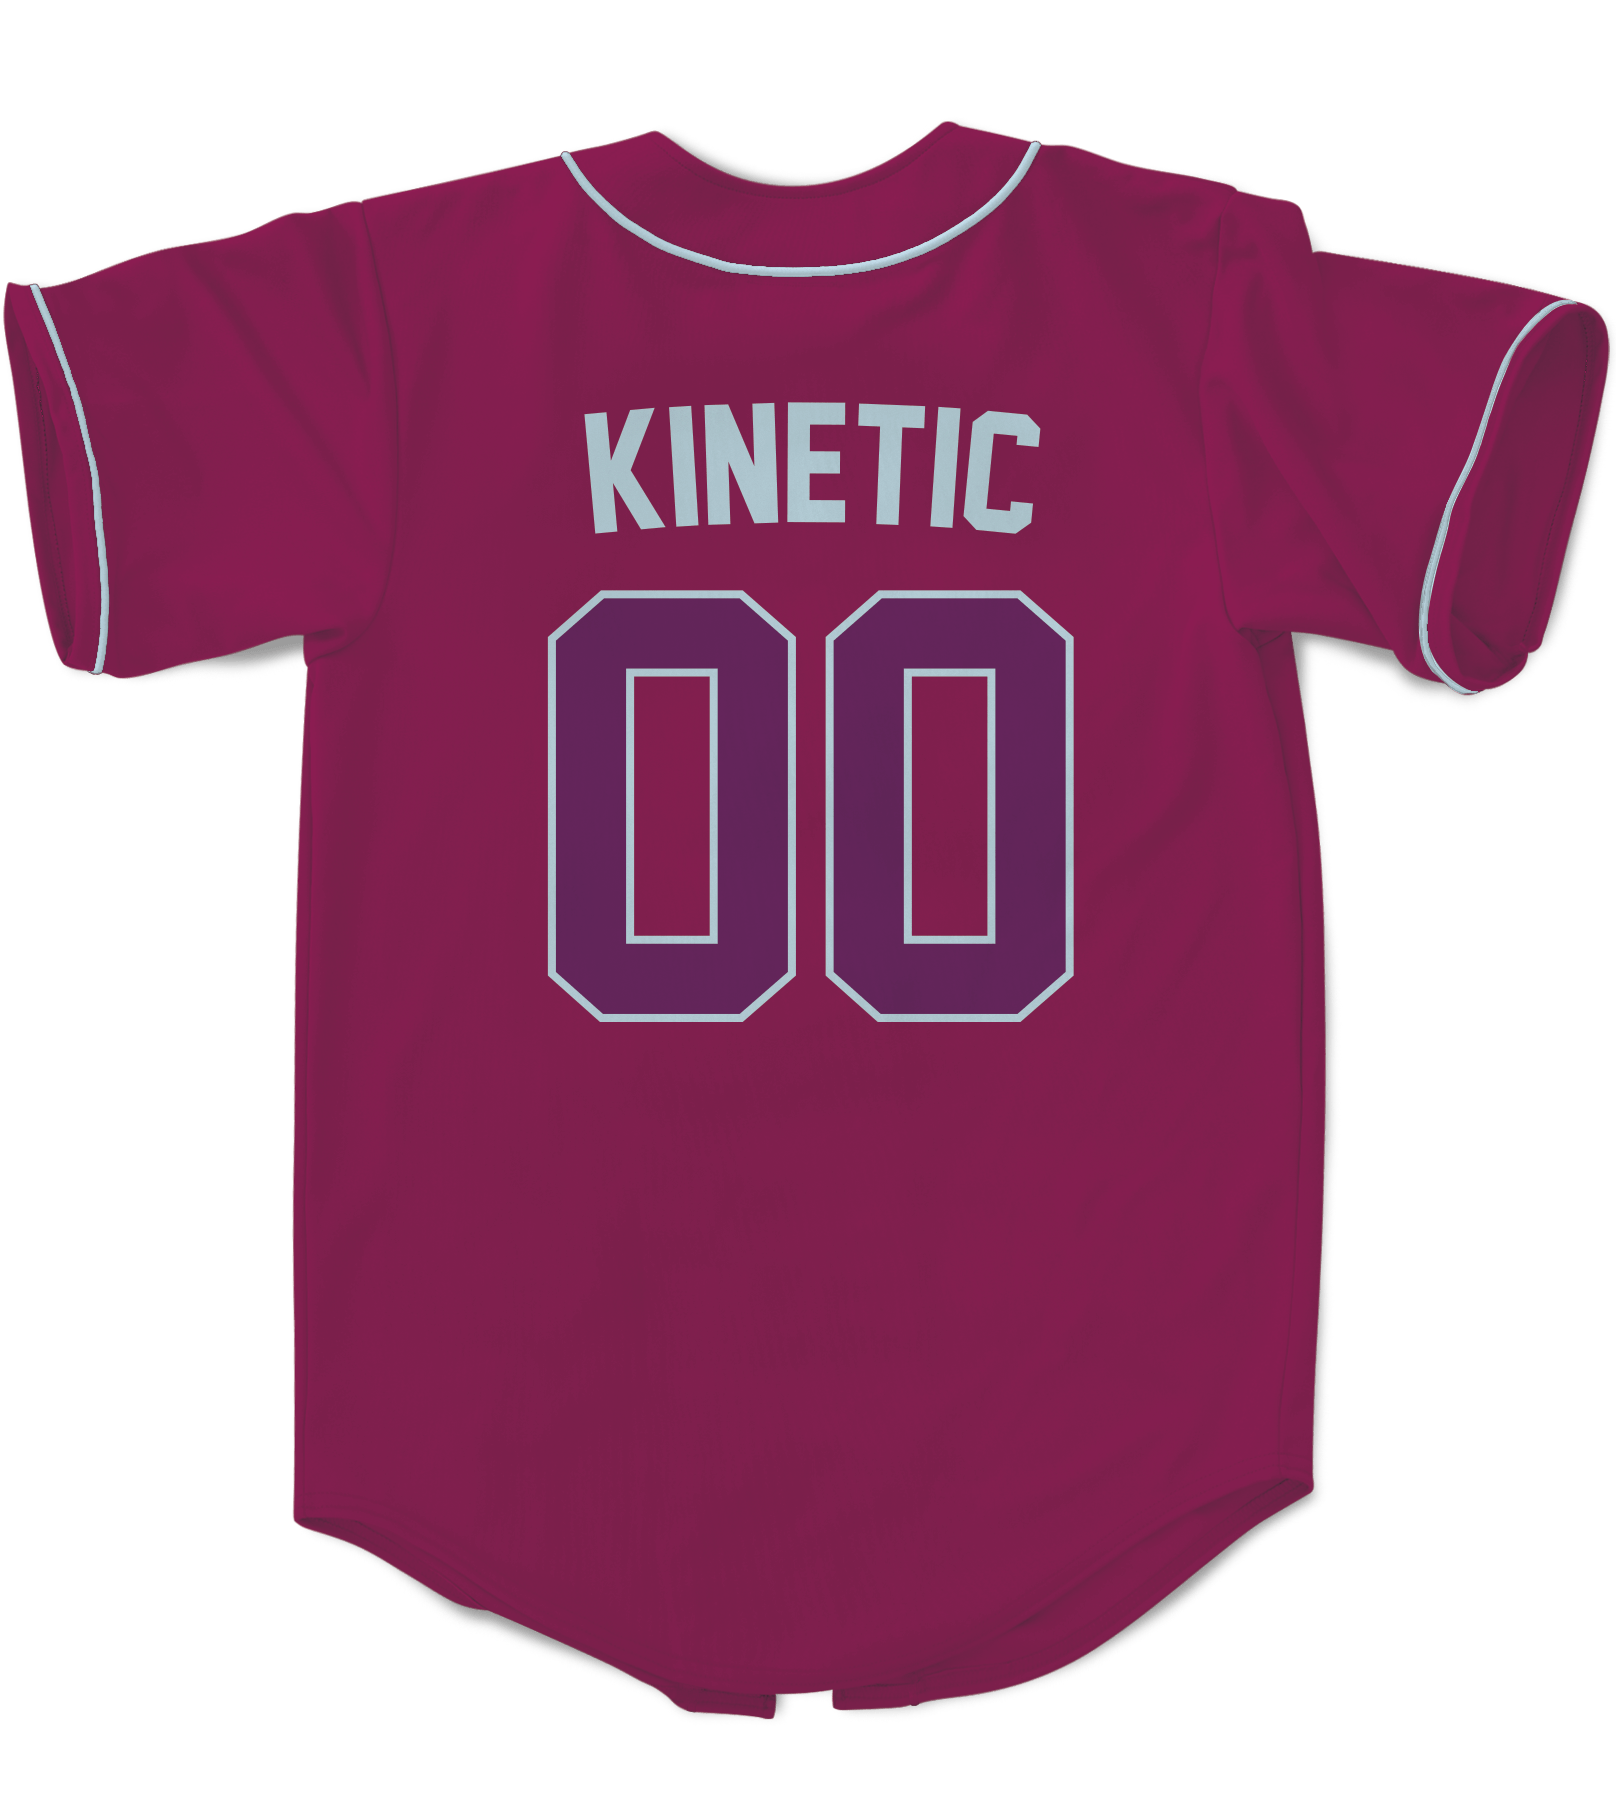 PI BETA PHI - The Block Baseball Jersey Premium Baseball Kinetic Society LLC 